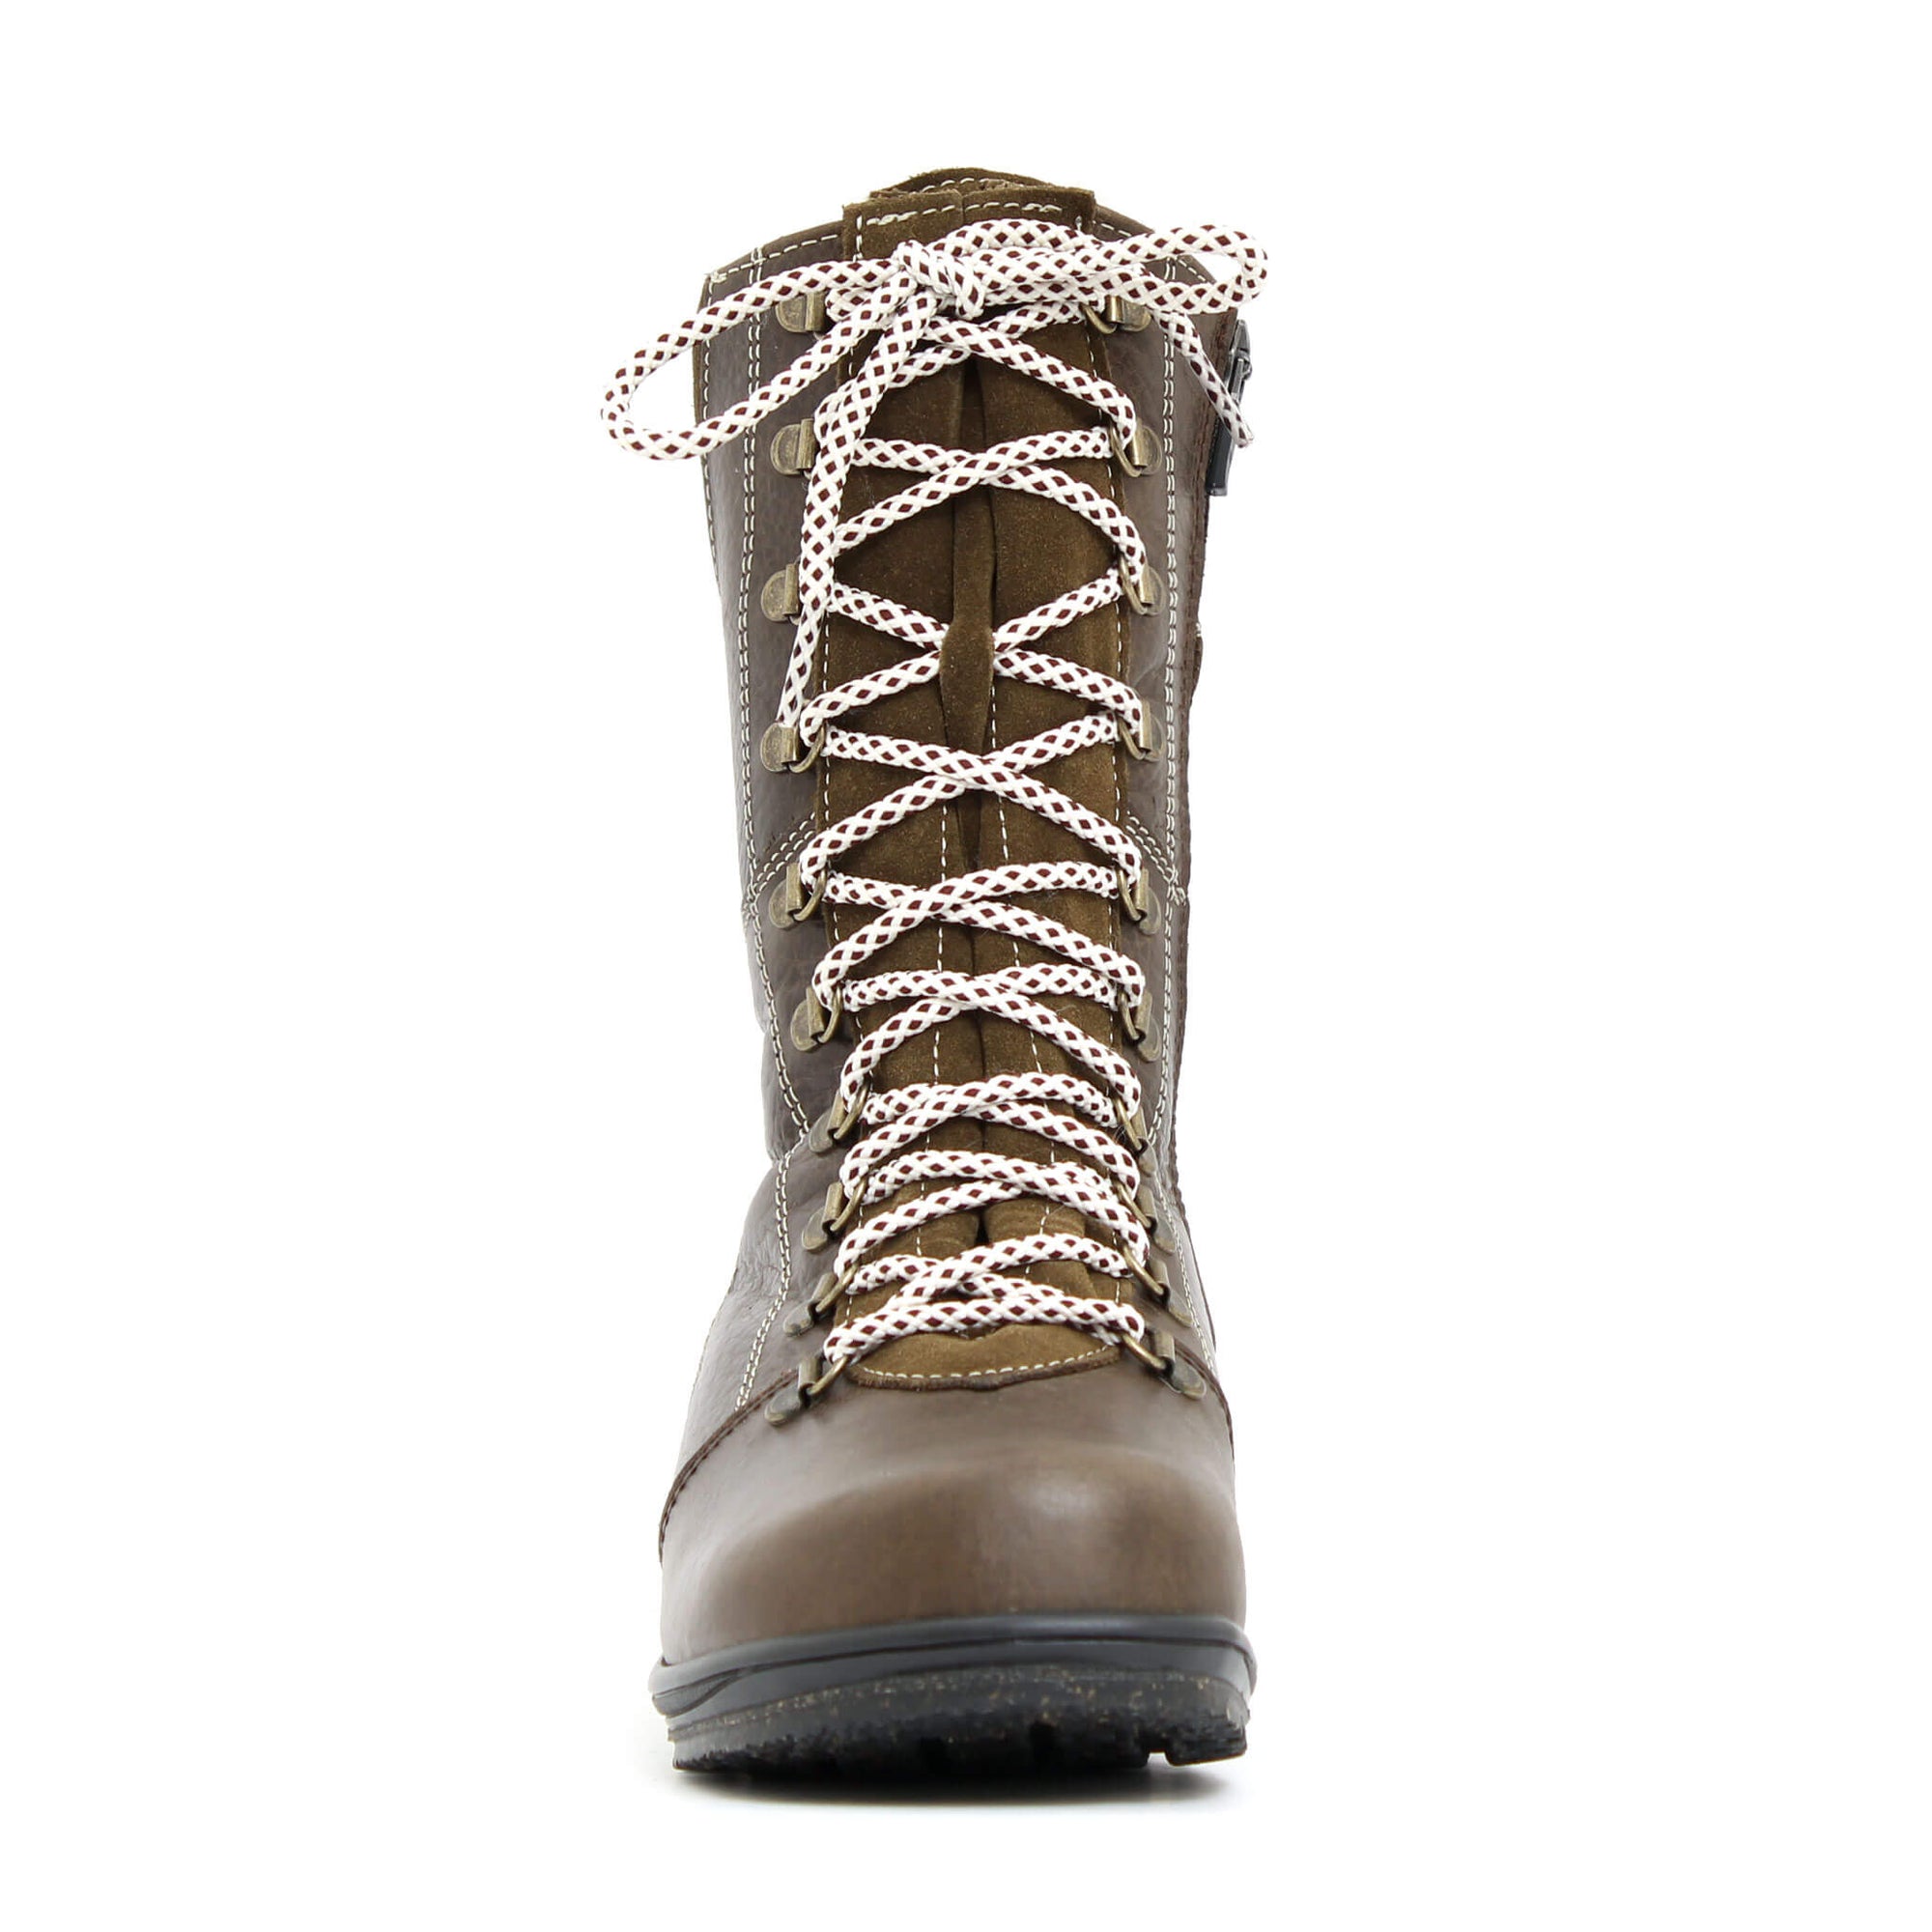 Banff winter boot for women - Black-Mustard